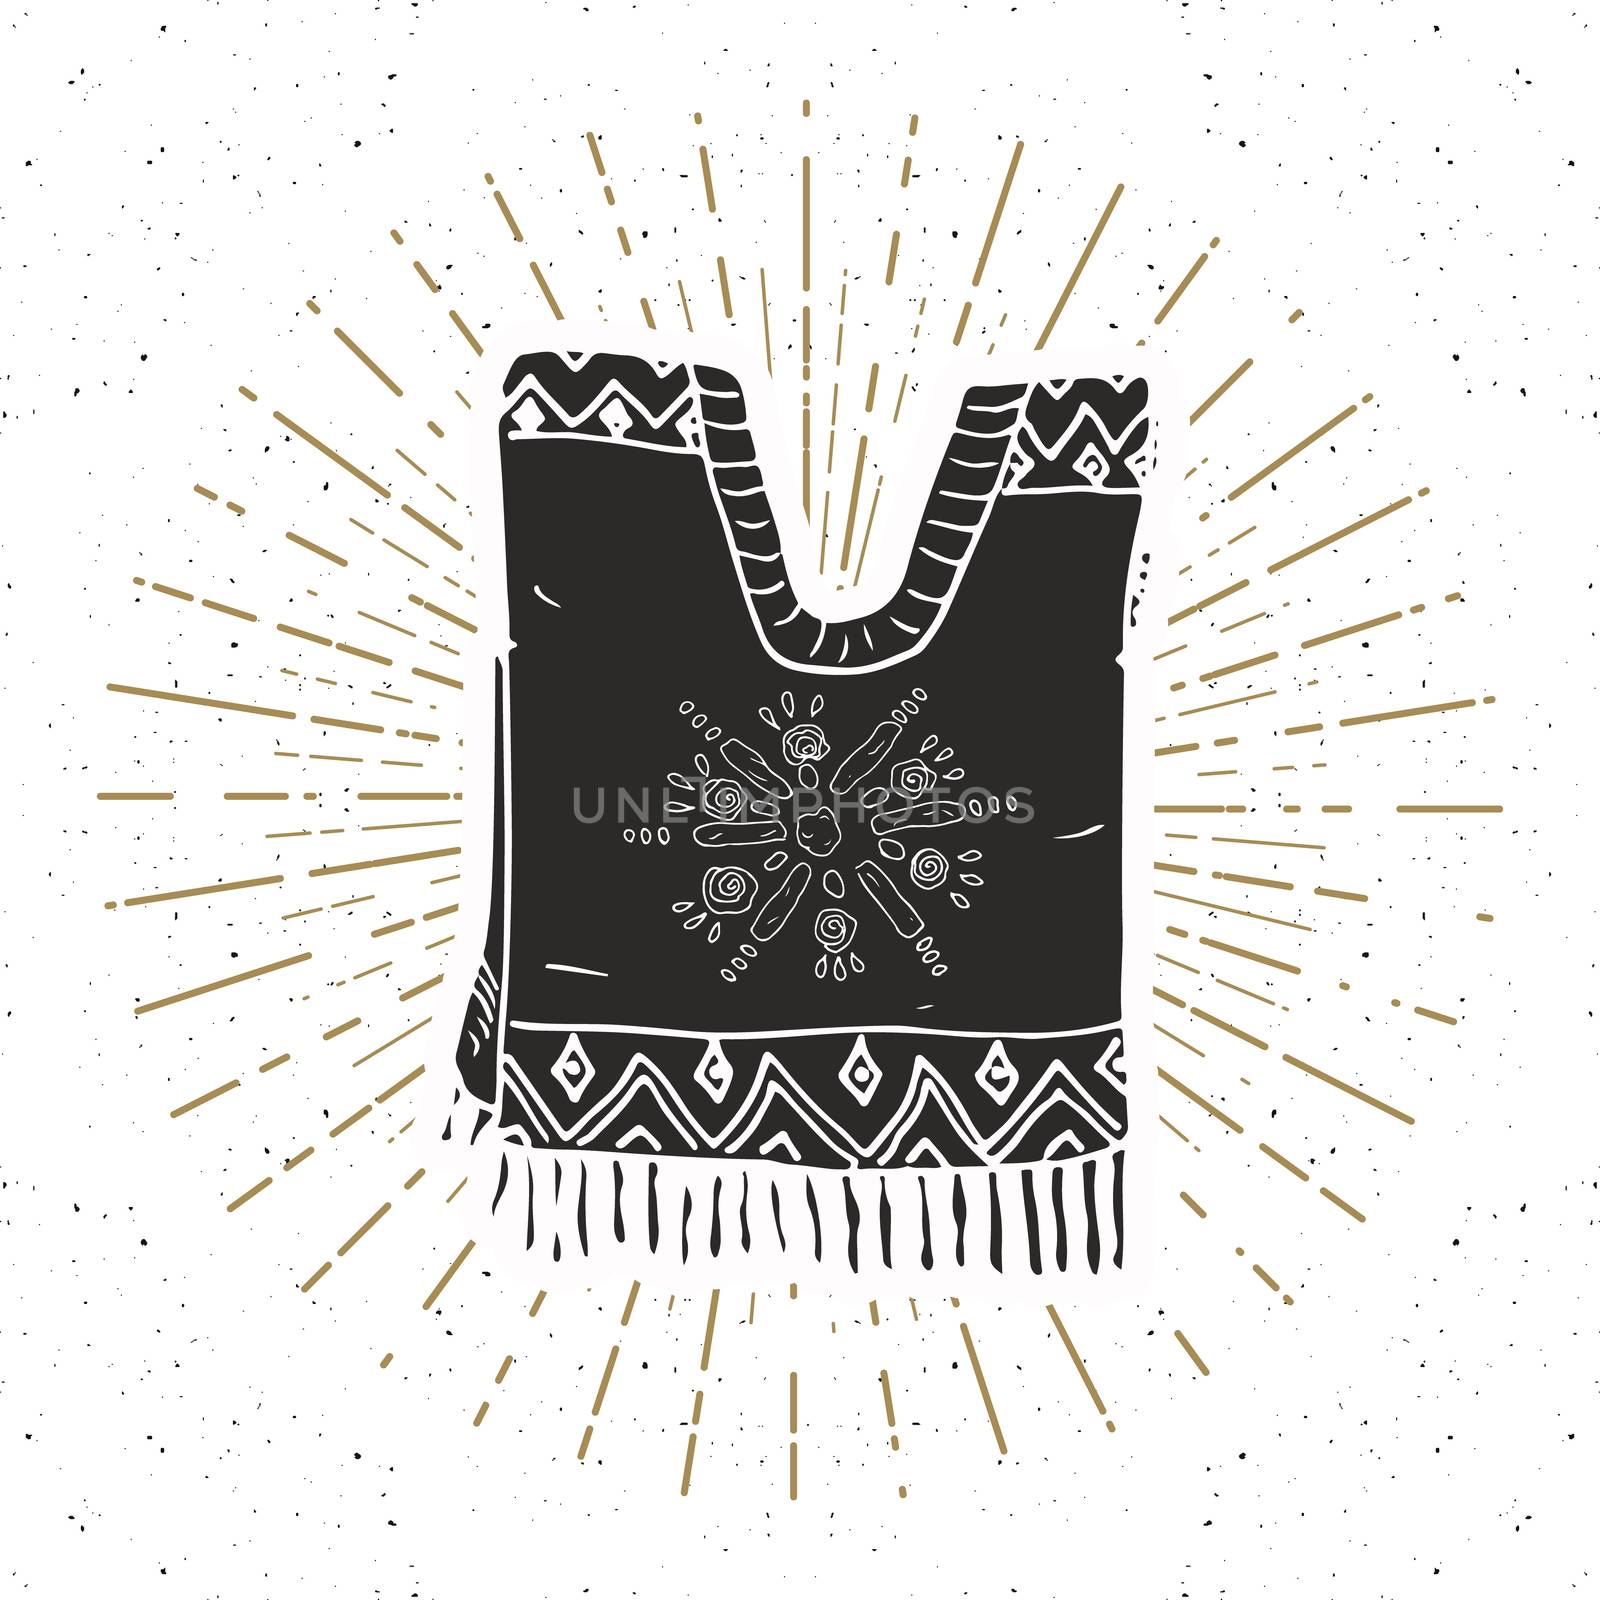 Vintage label, Hand drawn poncho mexican traditional clothing sketch, grunge textured retro badge, emblem design, typography t-shirt print, vector illustration by Lemon_workshop